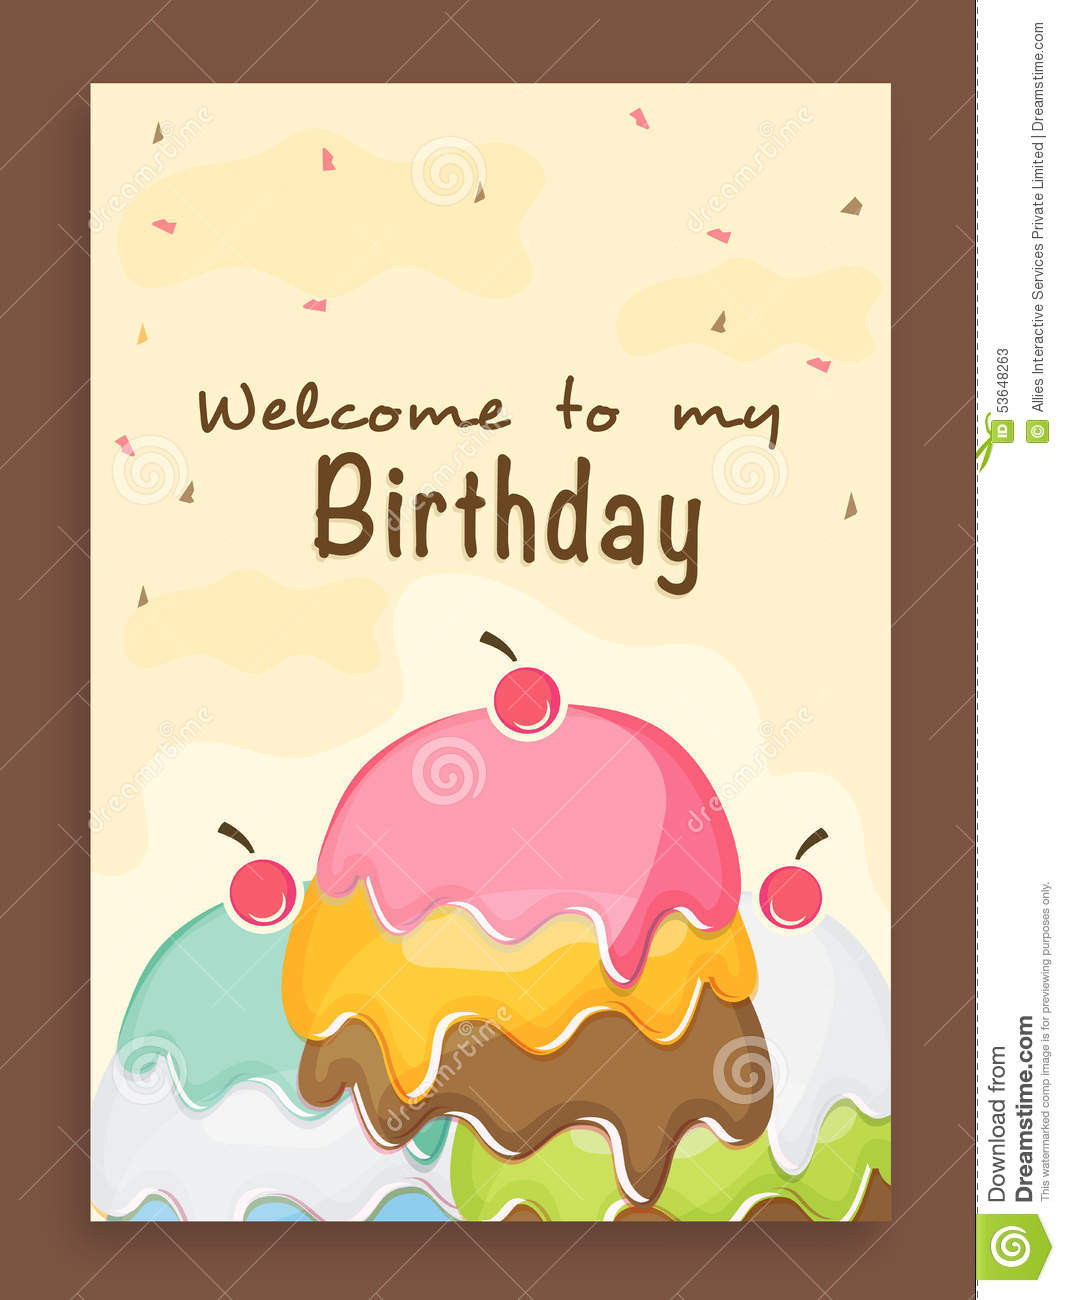 Invitation Cards For Birthday Party
 Invitation Card Design For Birthday Party Stock